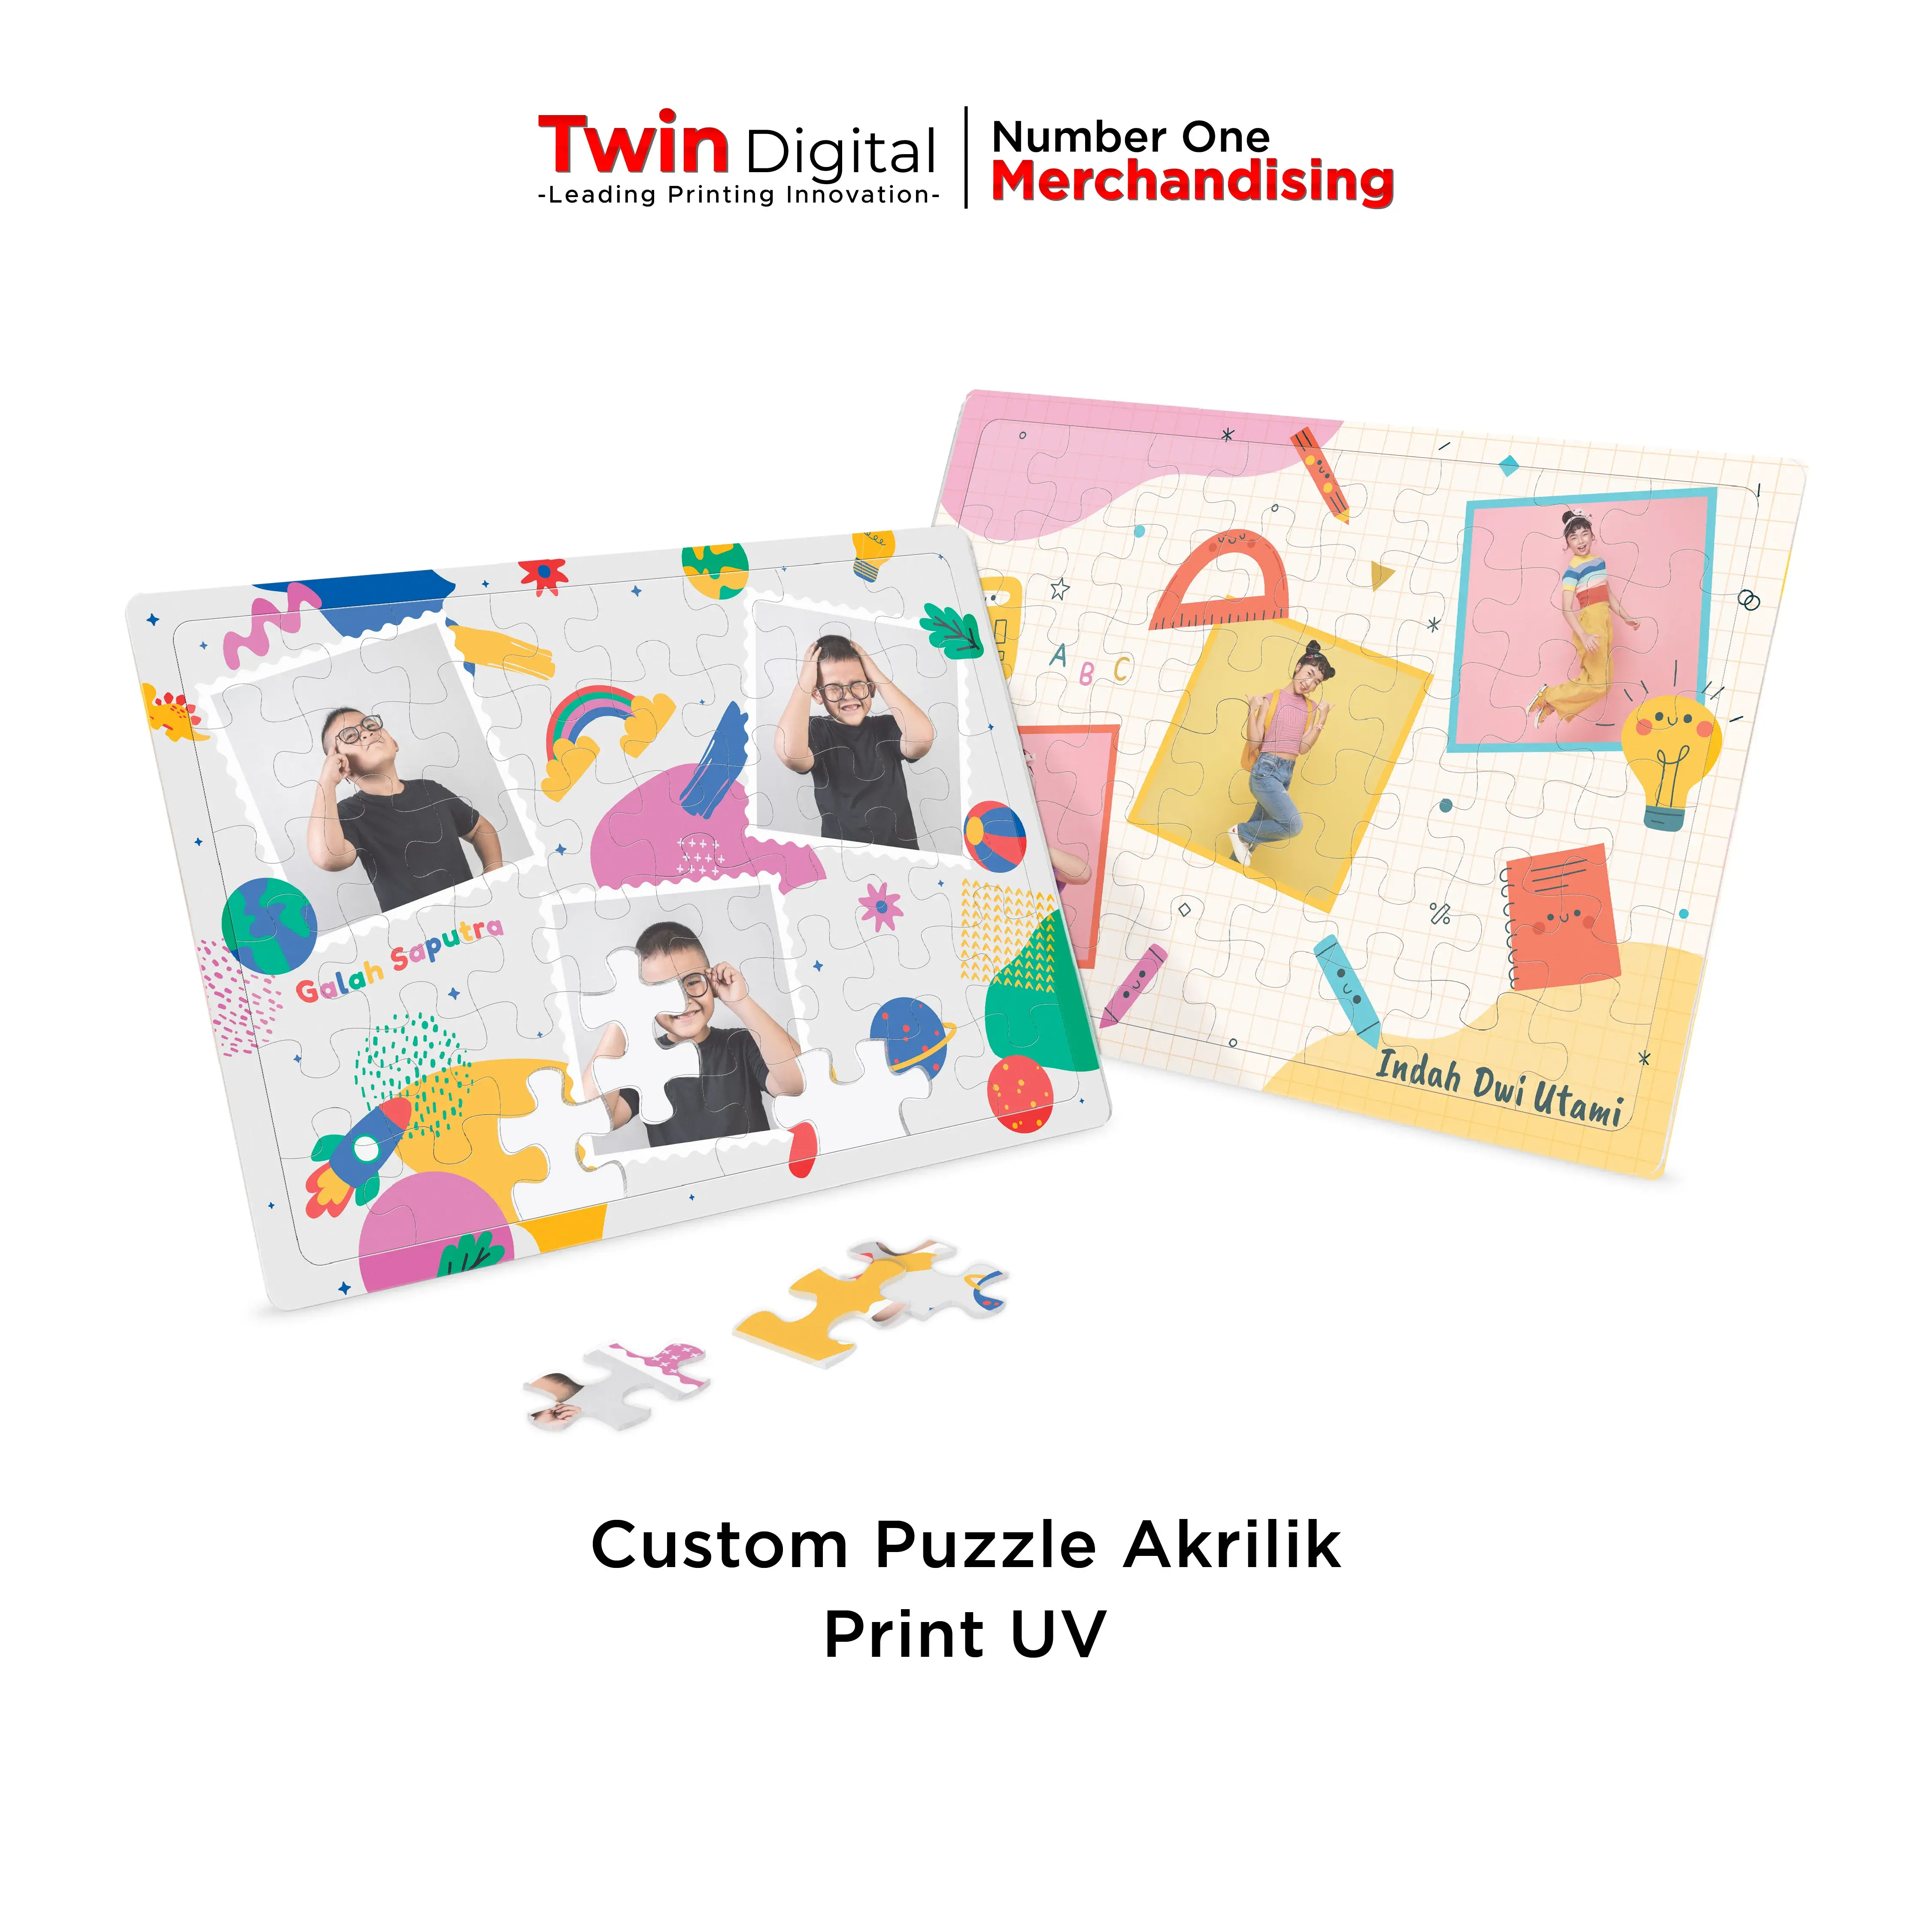 Custom Photocard Holder Akrilik Print UV - Twin Digital